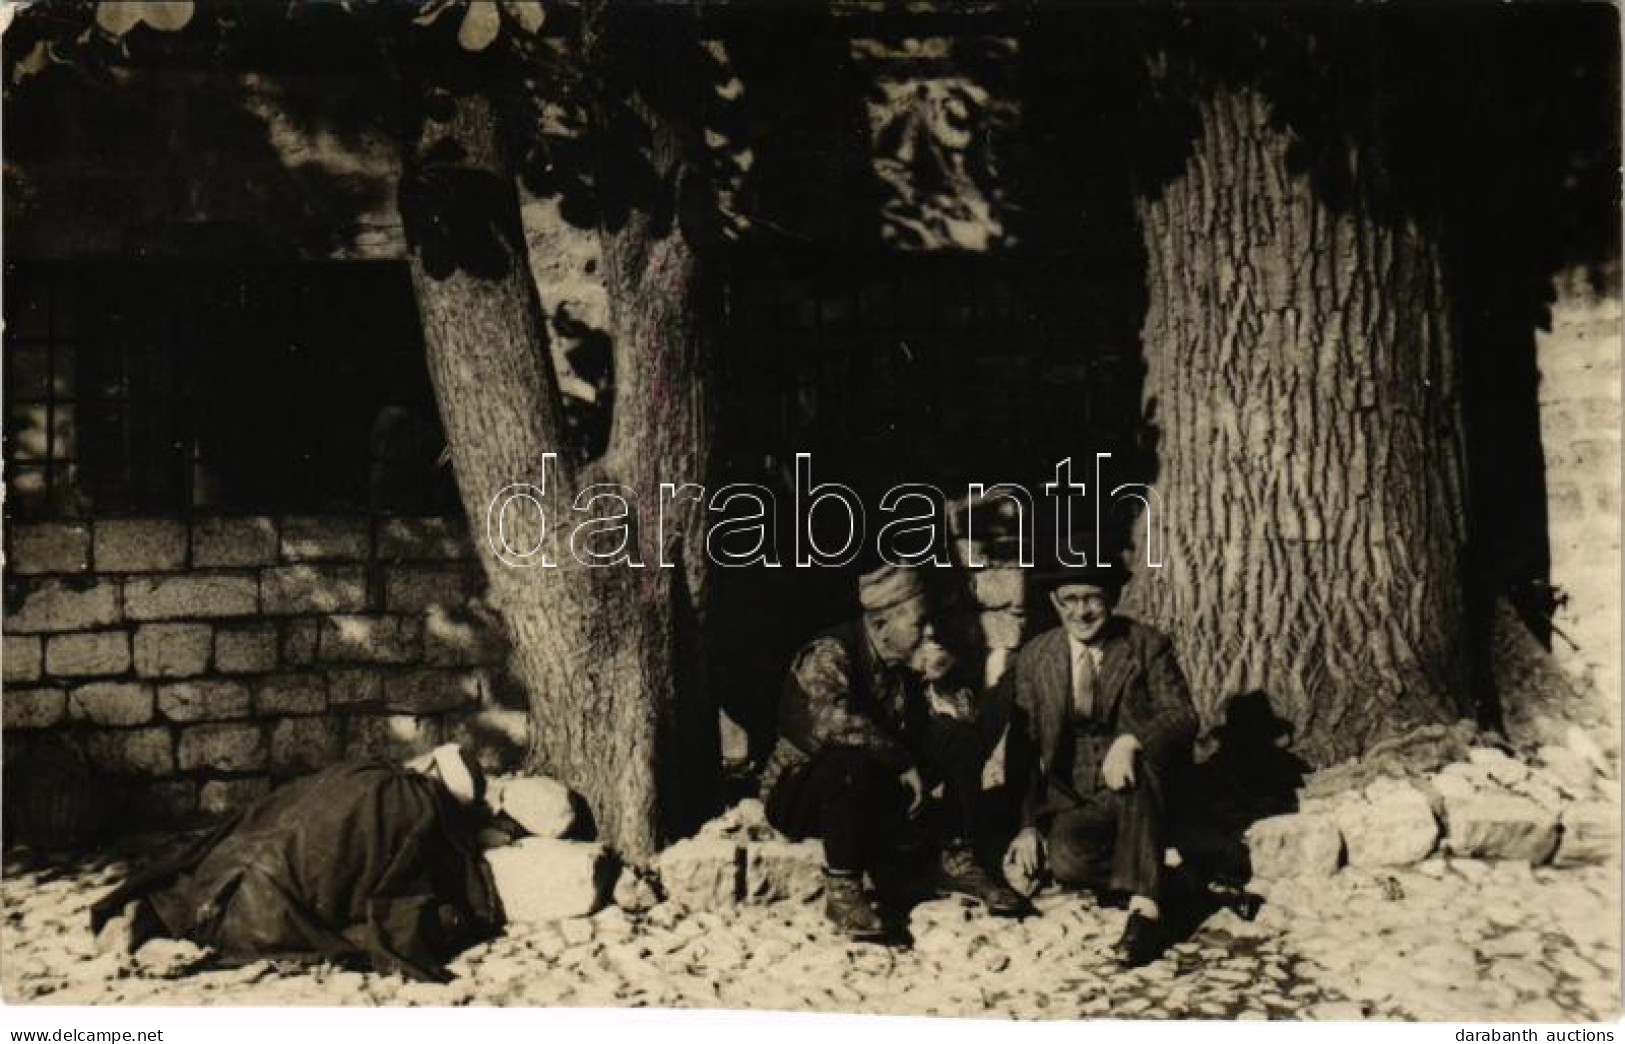 T2 1930 Ada Kaleh (?), úr Törökökkel / Man With Turkish Men. Photo - Unclassified